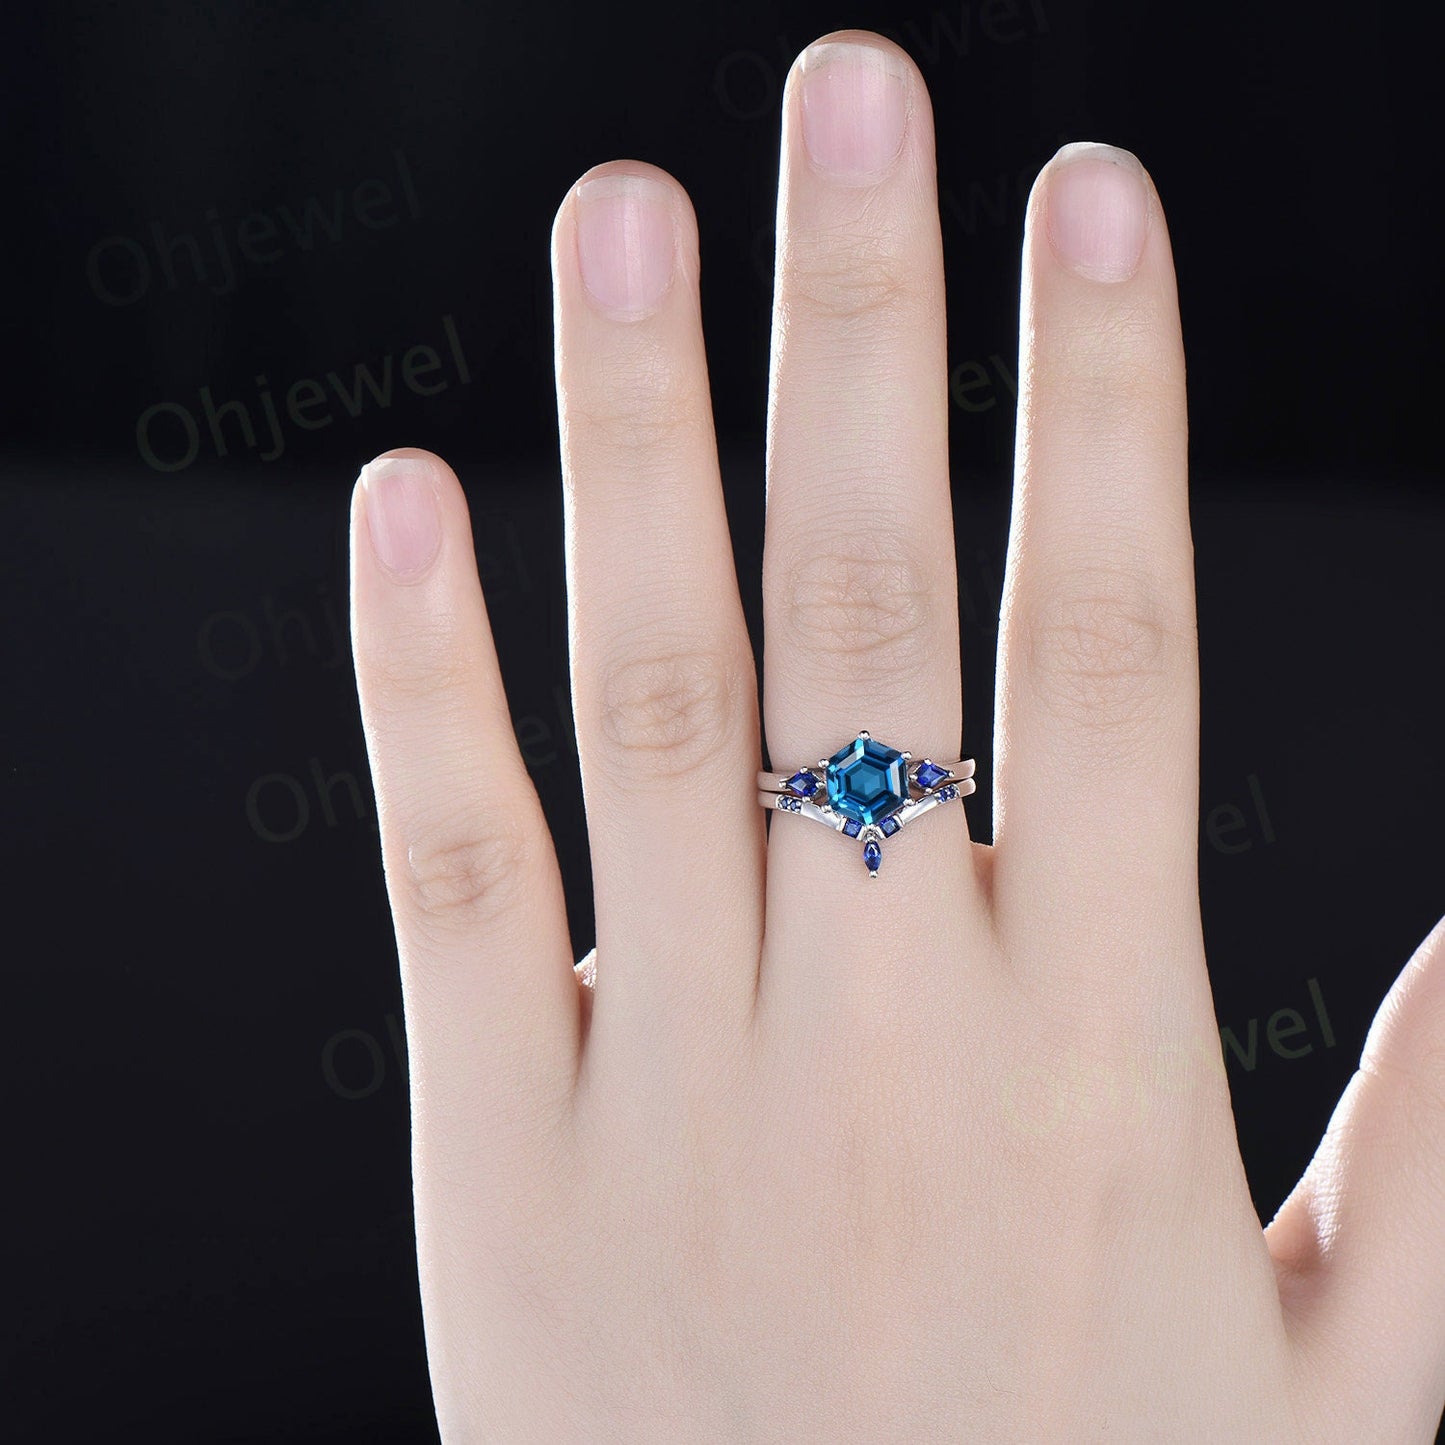 Hexagon London blue topaz engagement ring set white gold three stone princess kite sapphire ring unique wedding promise ring set women gift